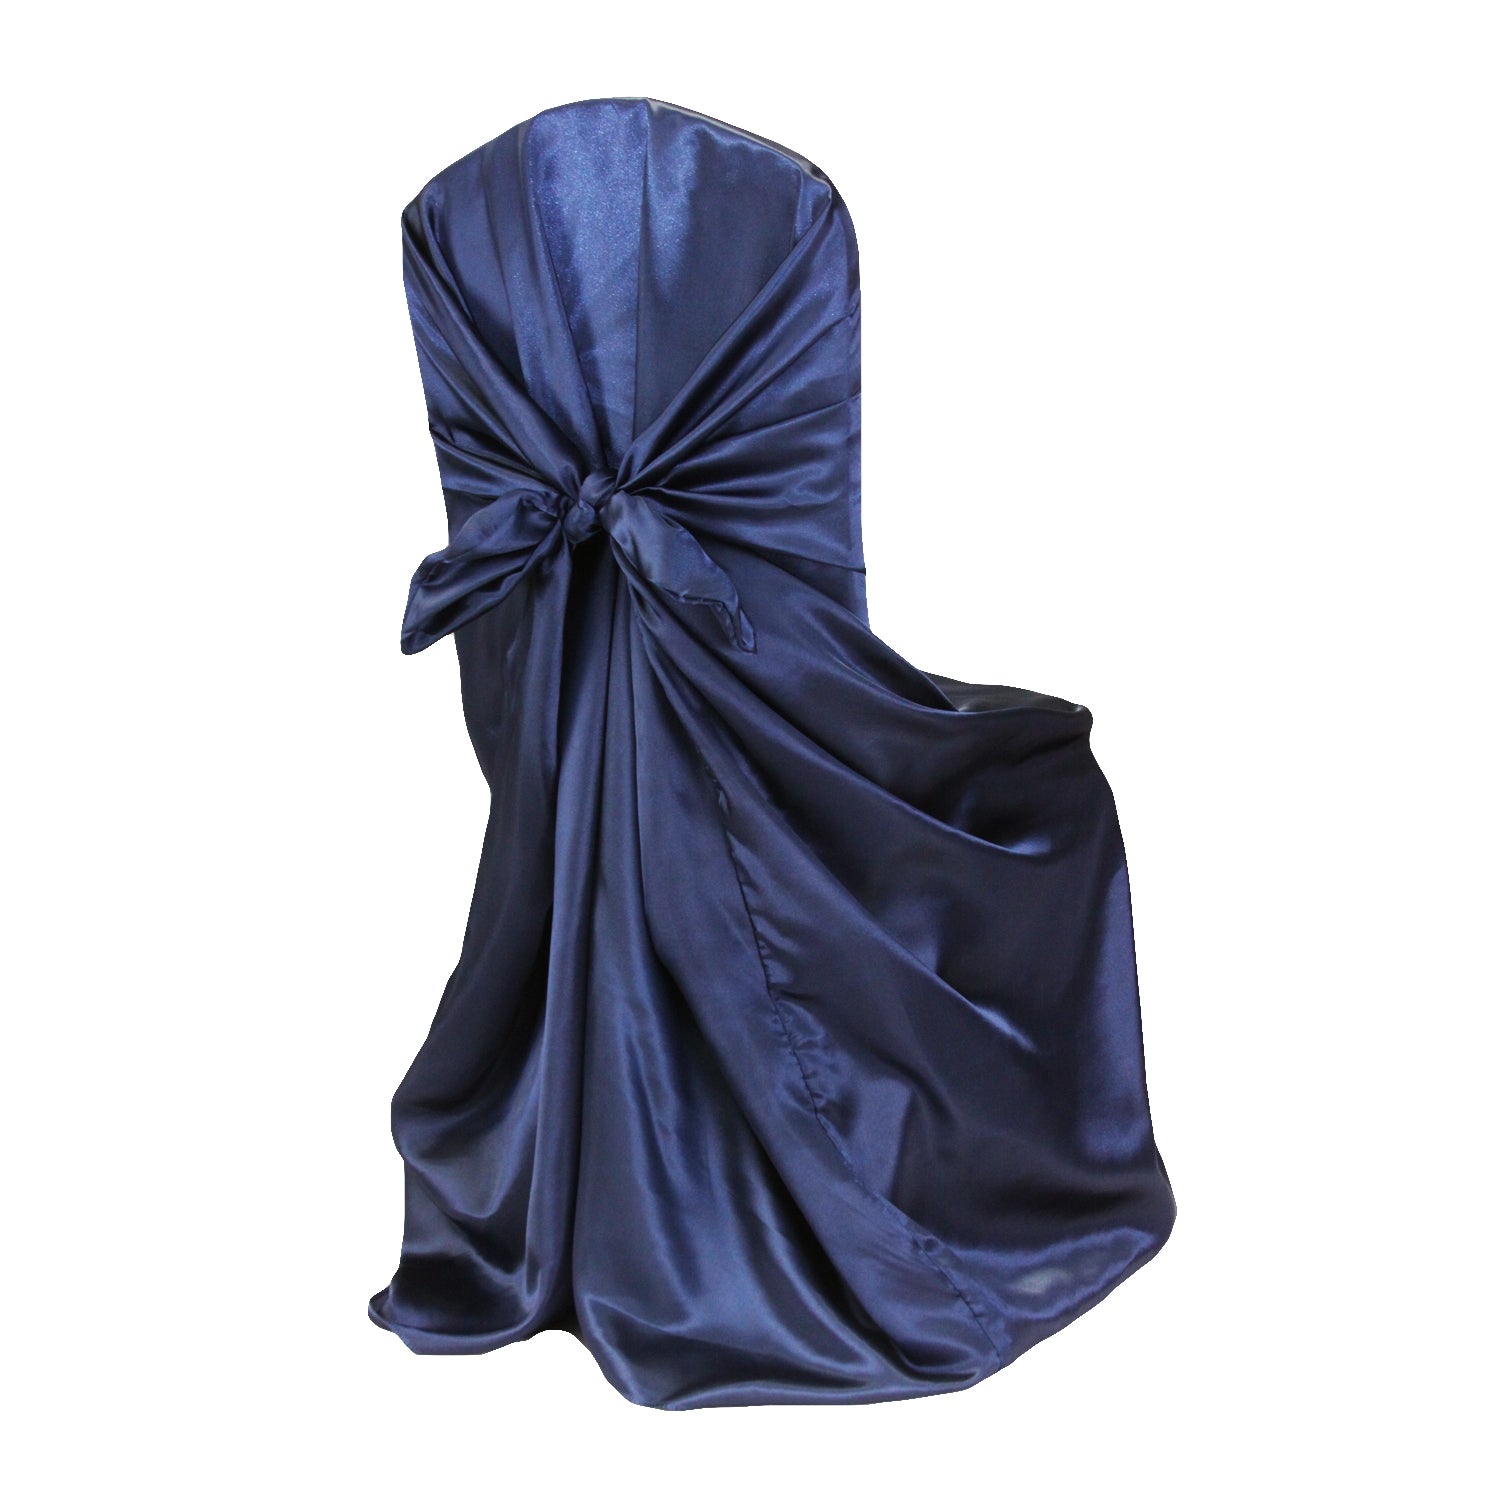 Universal Satin Self Tie Chair Cover - Navy Blue - CV Linens